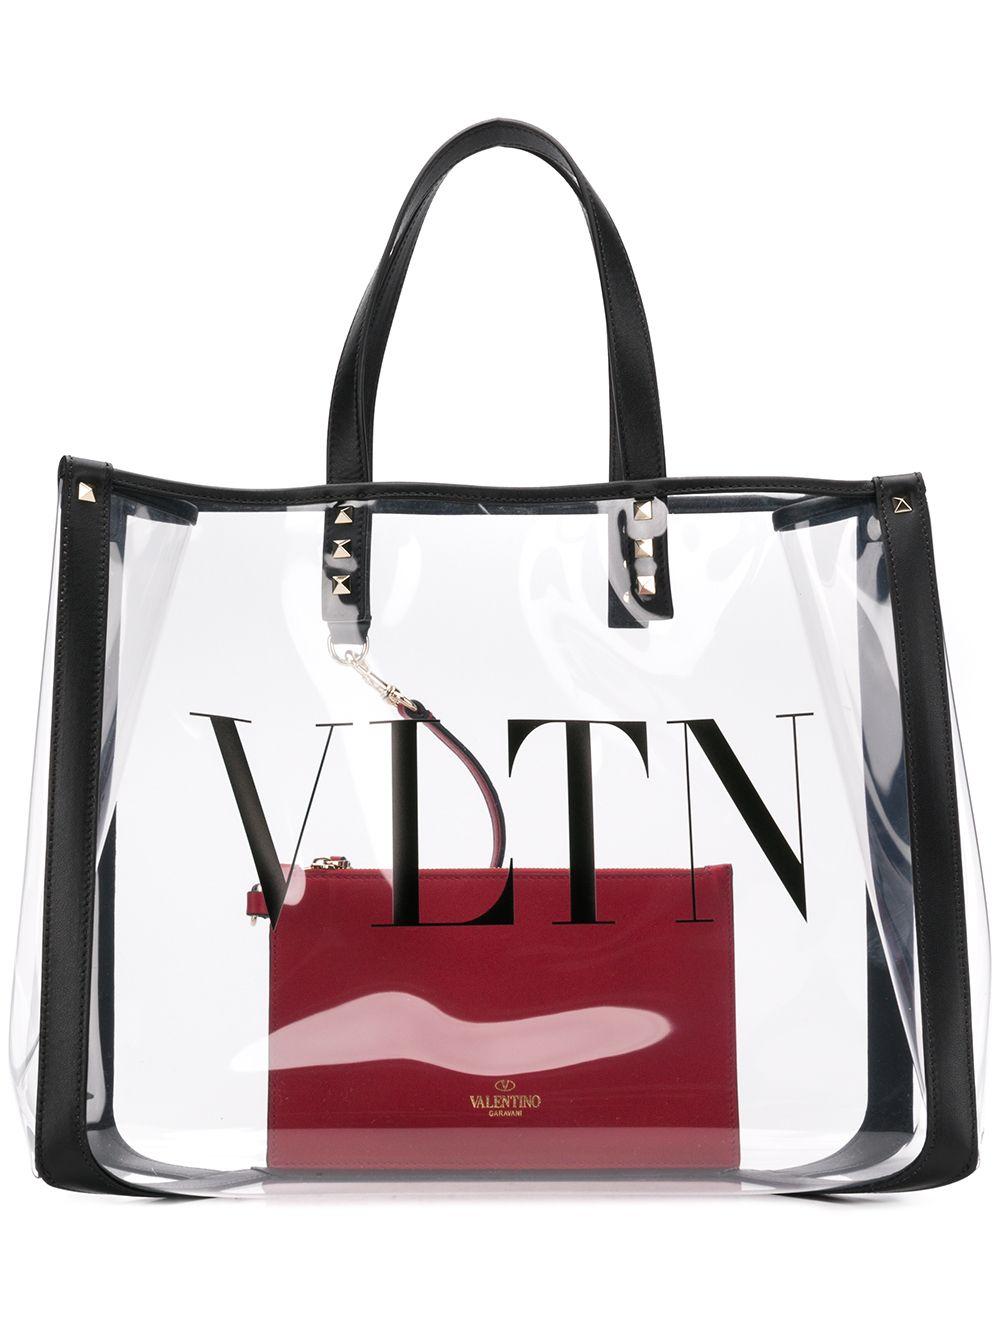 Valentino Vltn Large Tote Bag in Black - Lyst